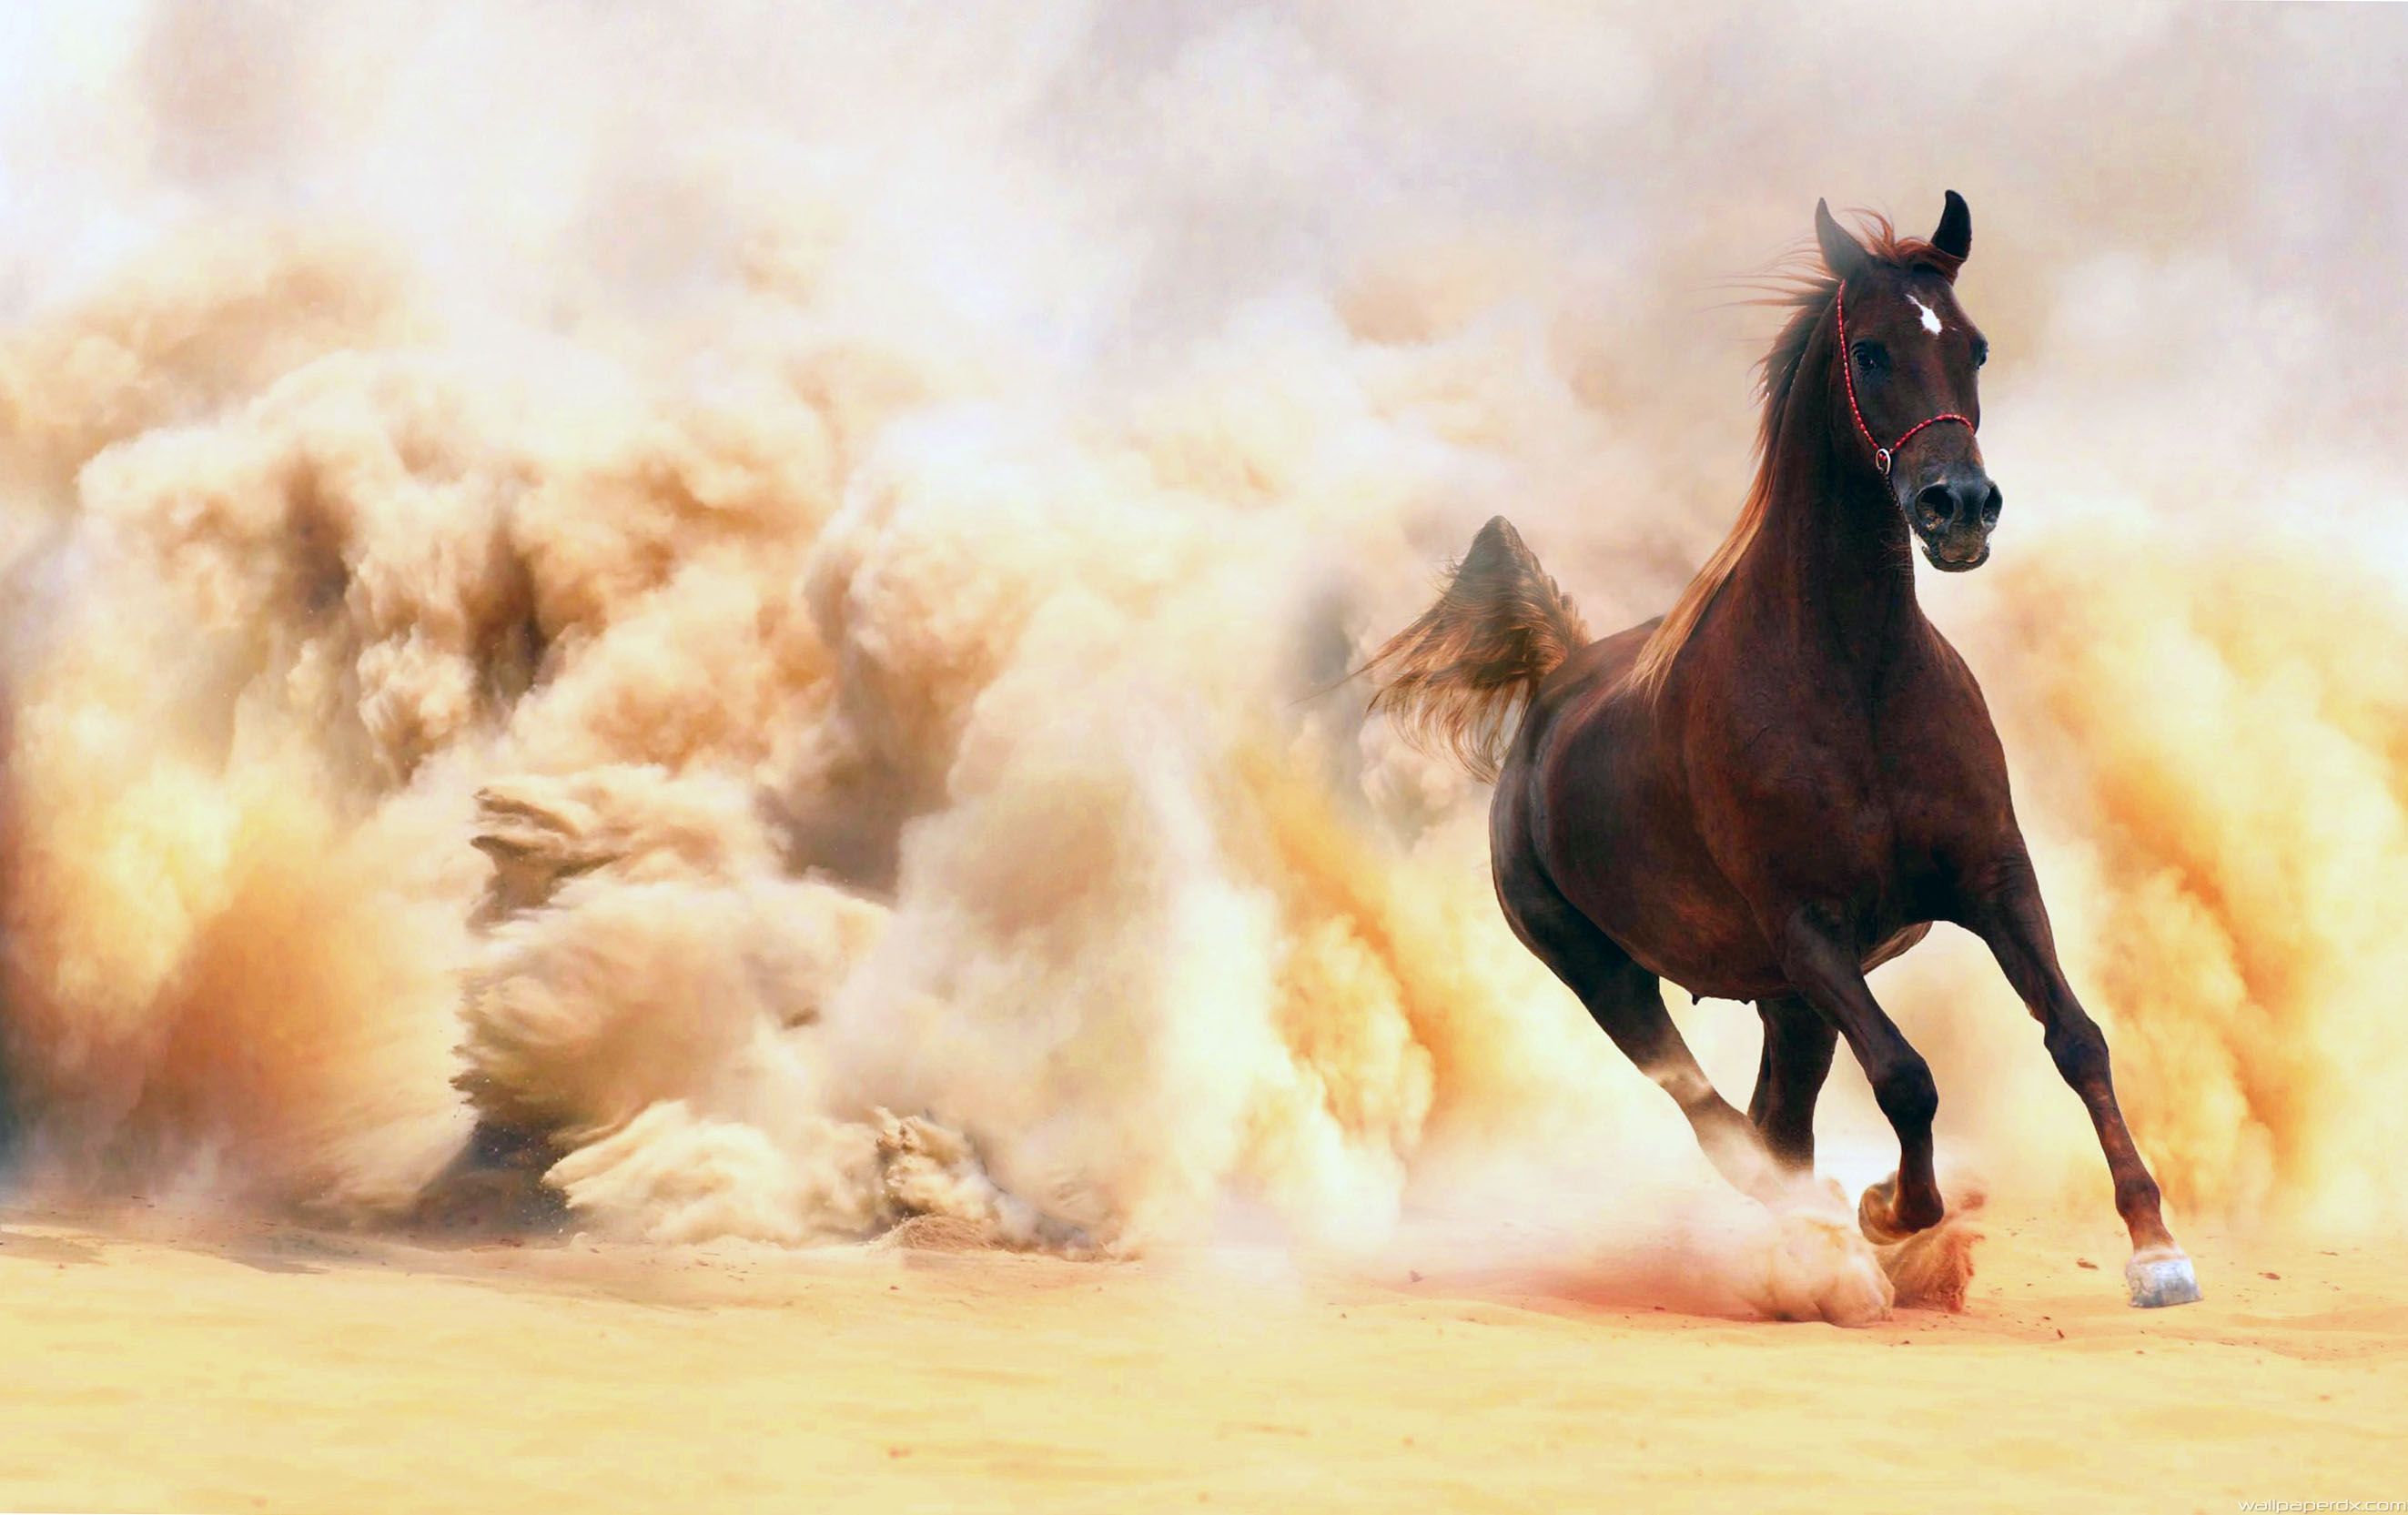 amazing wallpaper of the arab desert Image Search Results. Horse wallpaper, Arabian horse, Horses